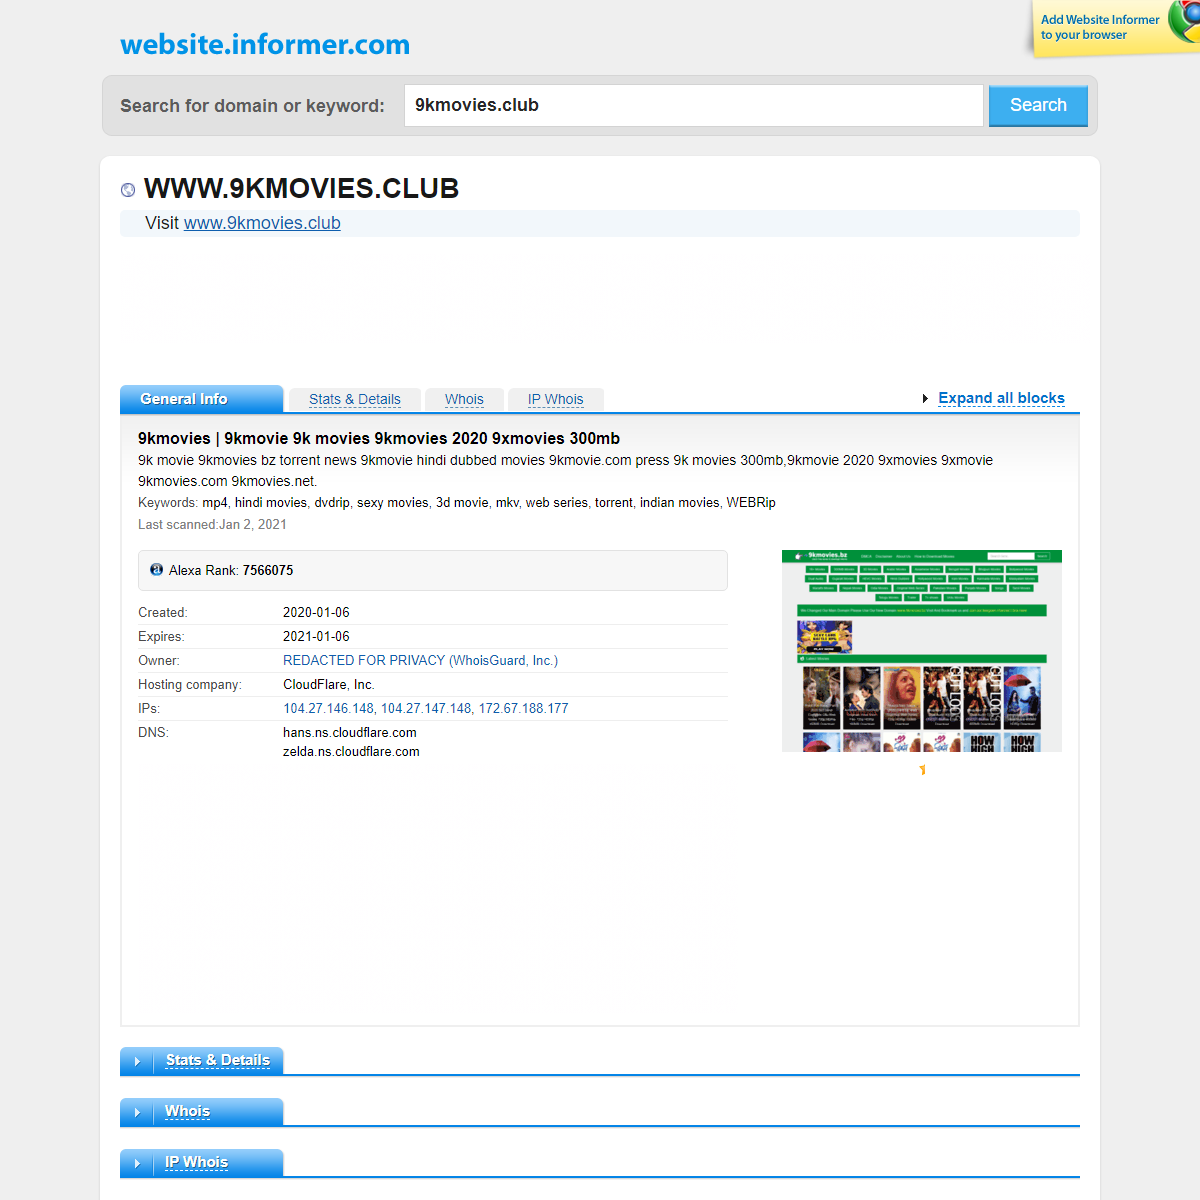 A complete backup of https://website.informer.com/9kmovies.club